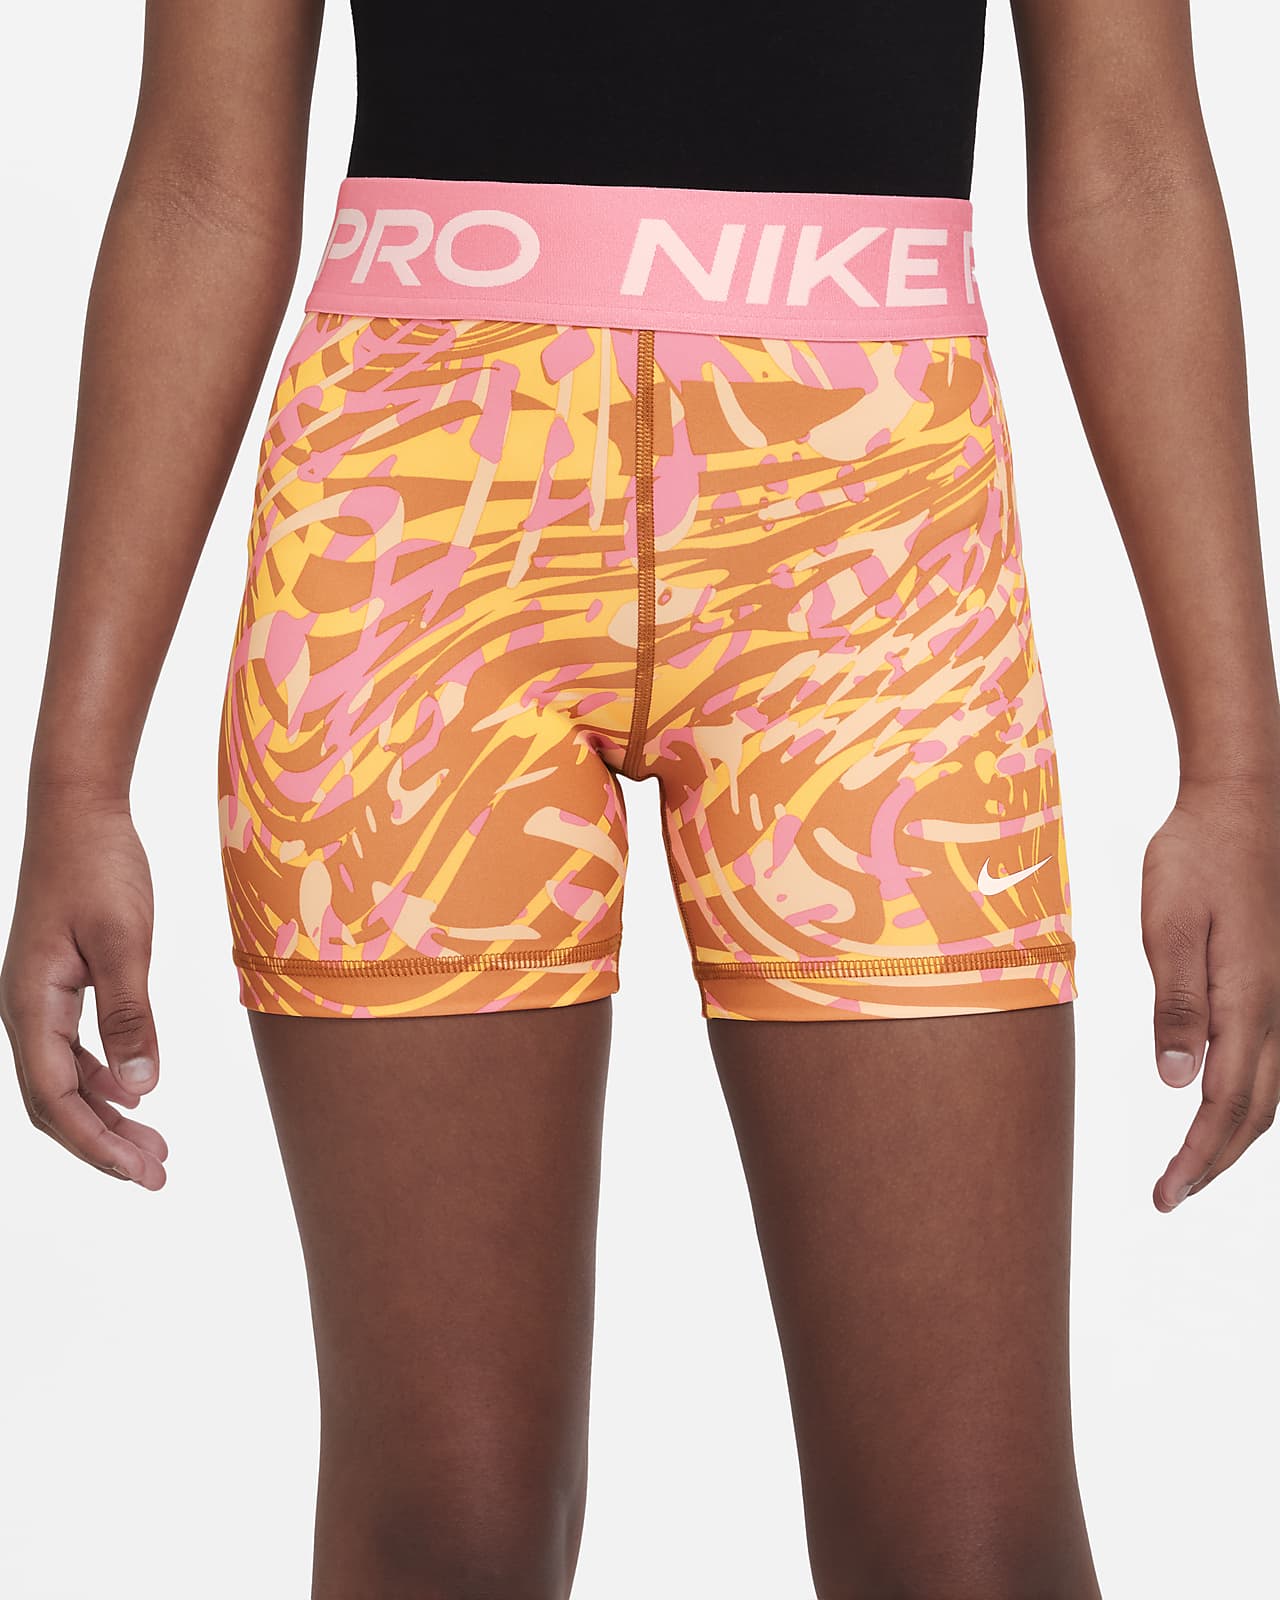 nike pro compression shorts 3 inch